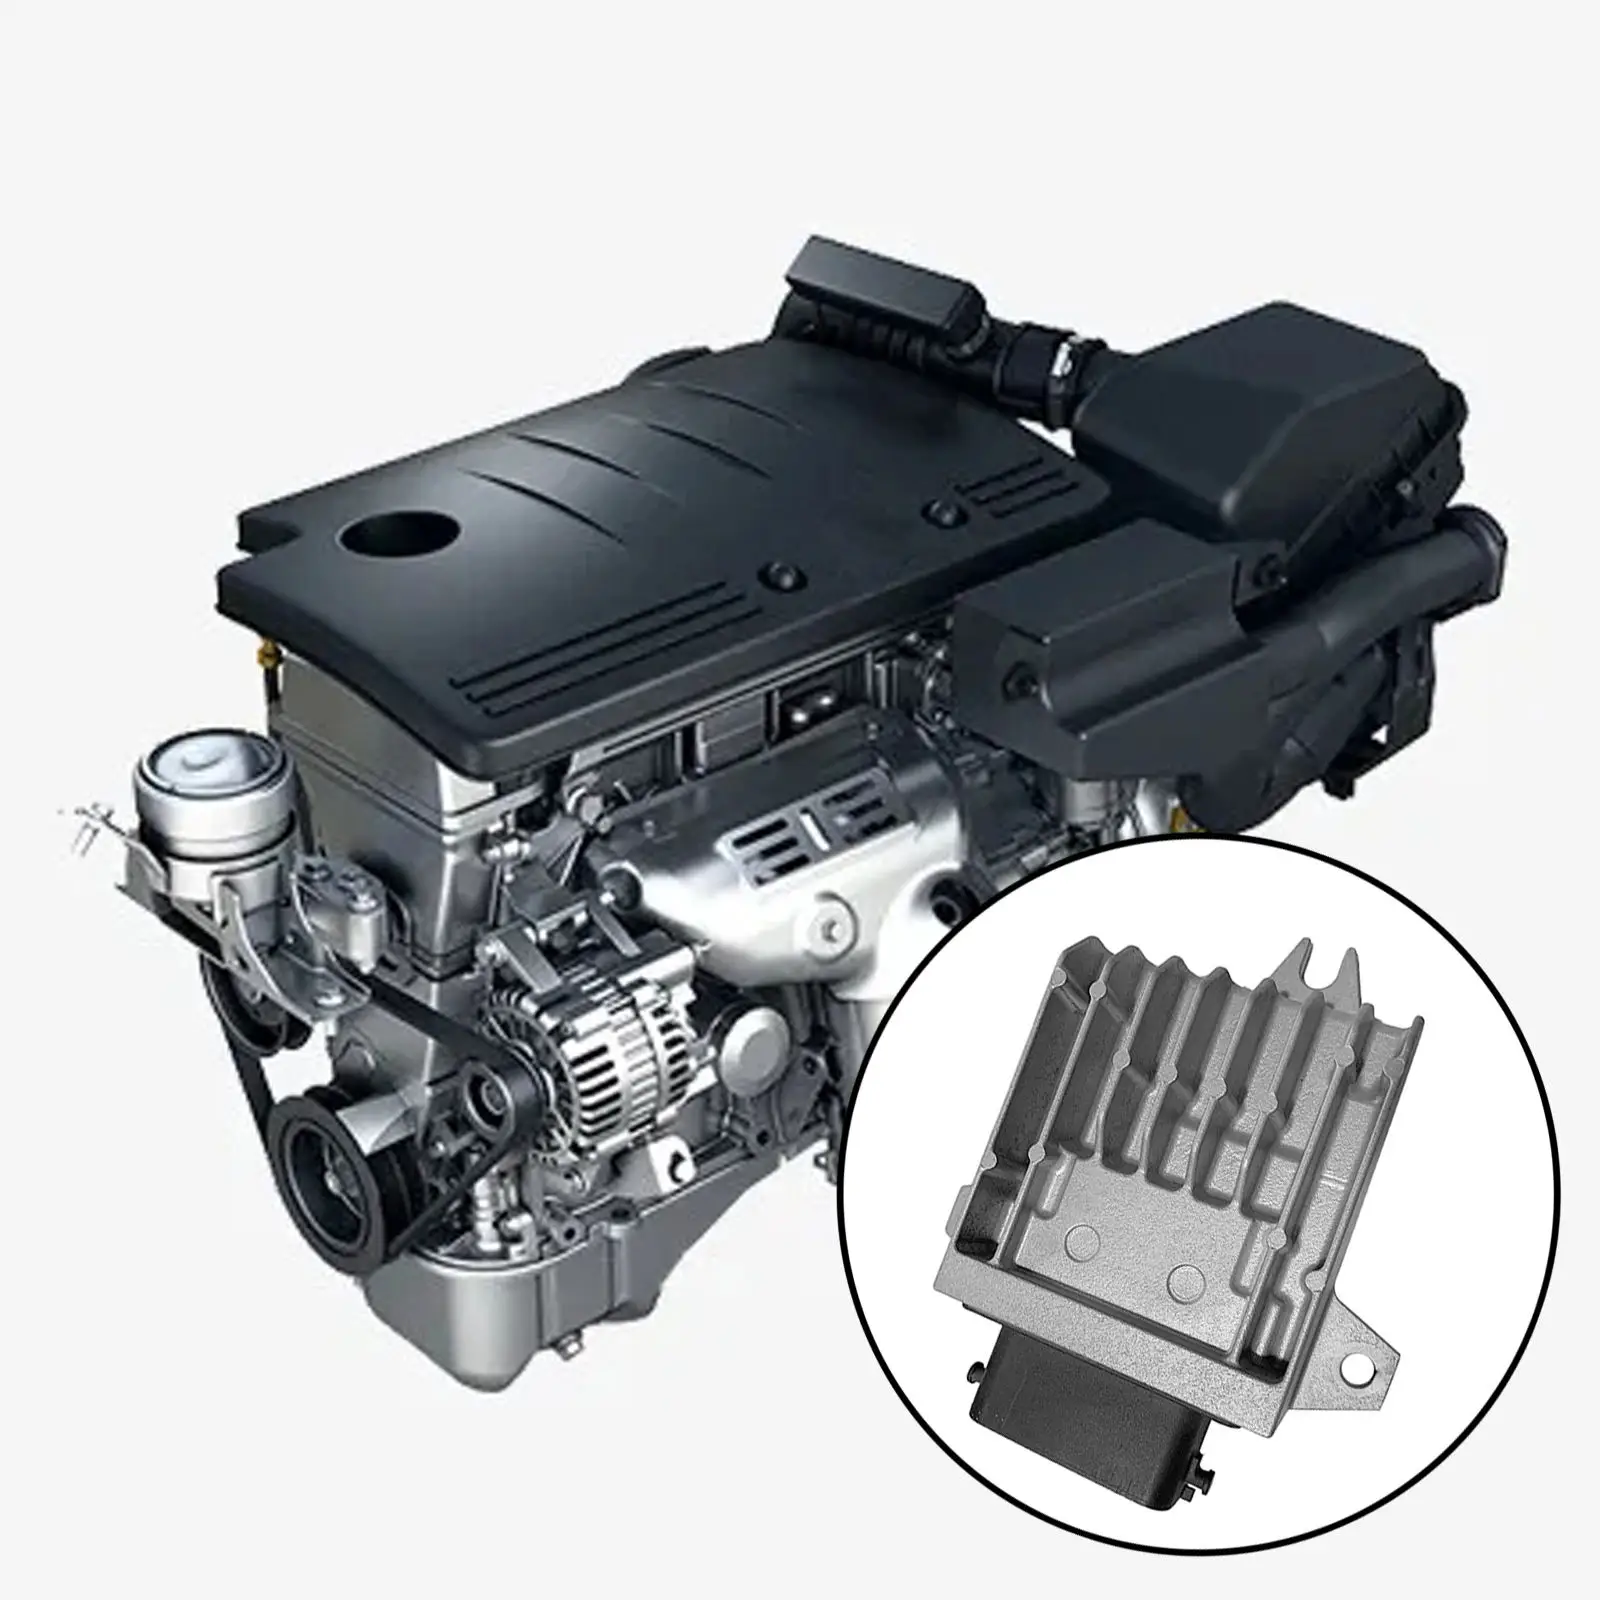 Transmission Control Module for Mazda 5 2.3L 2008-2010 9C189E1B 9C-18-9E1D